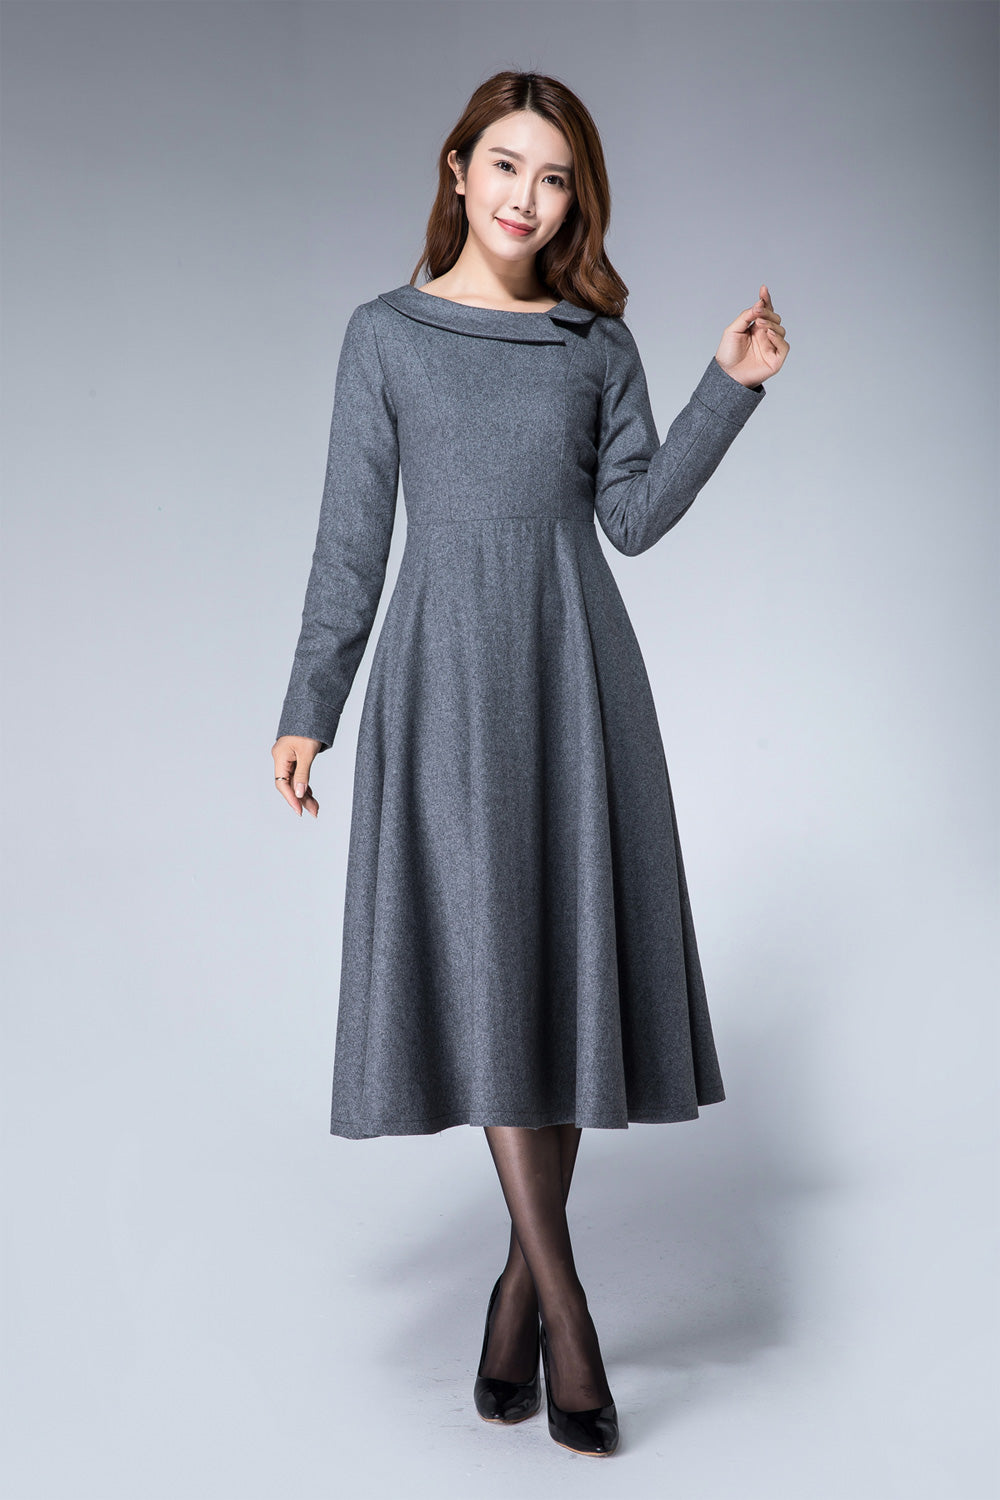 warm dark gray wool dress 1874 – XiaoLizi